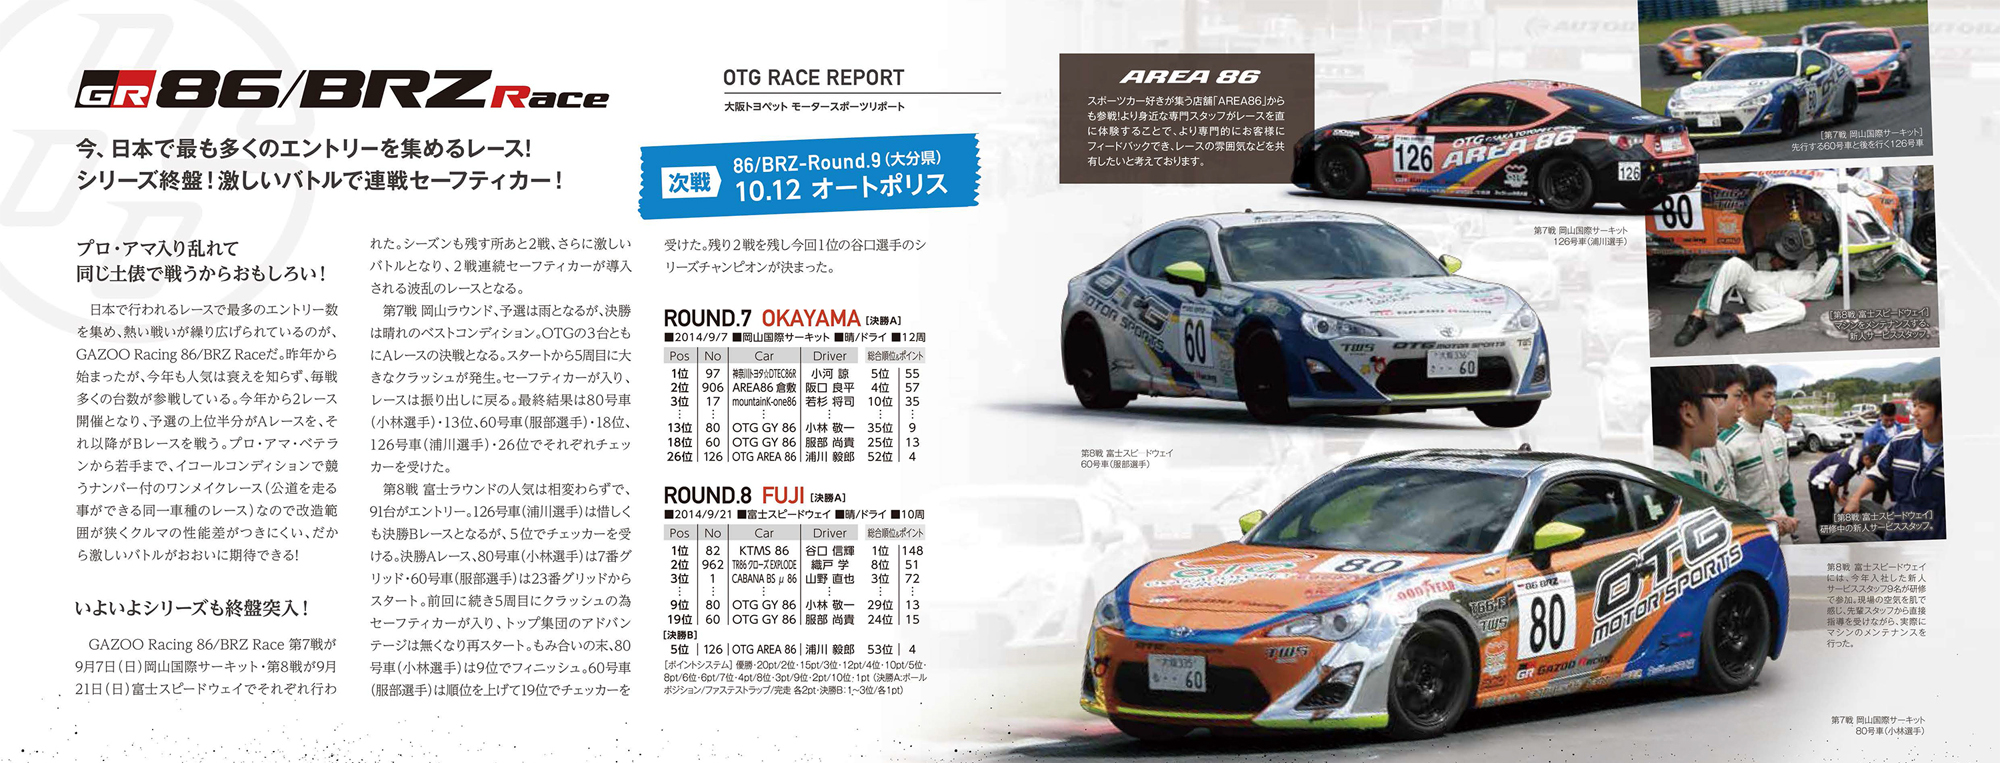 http://www.osaka-toyopet.jp/otg-ms/86brz_race/img/motorsports1410-2.jpg